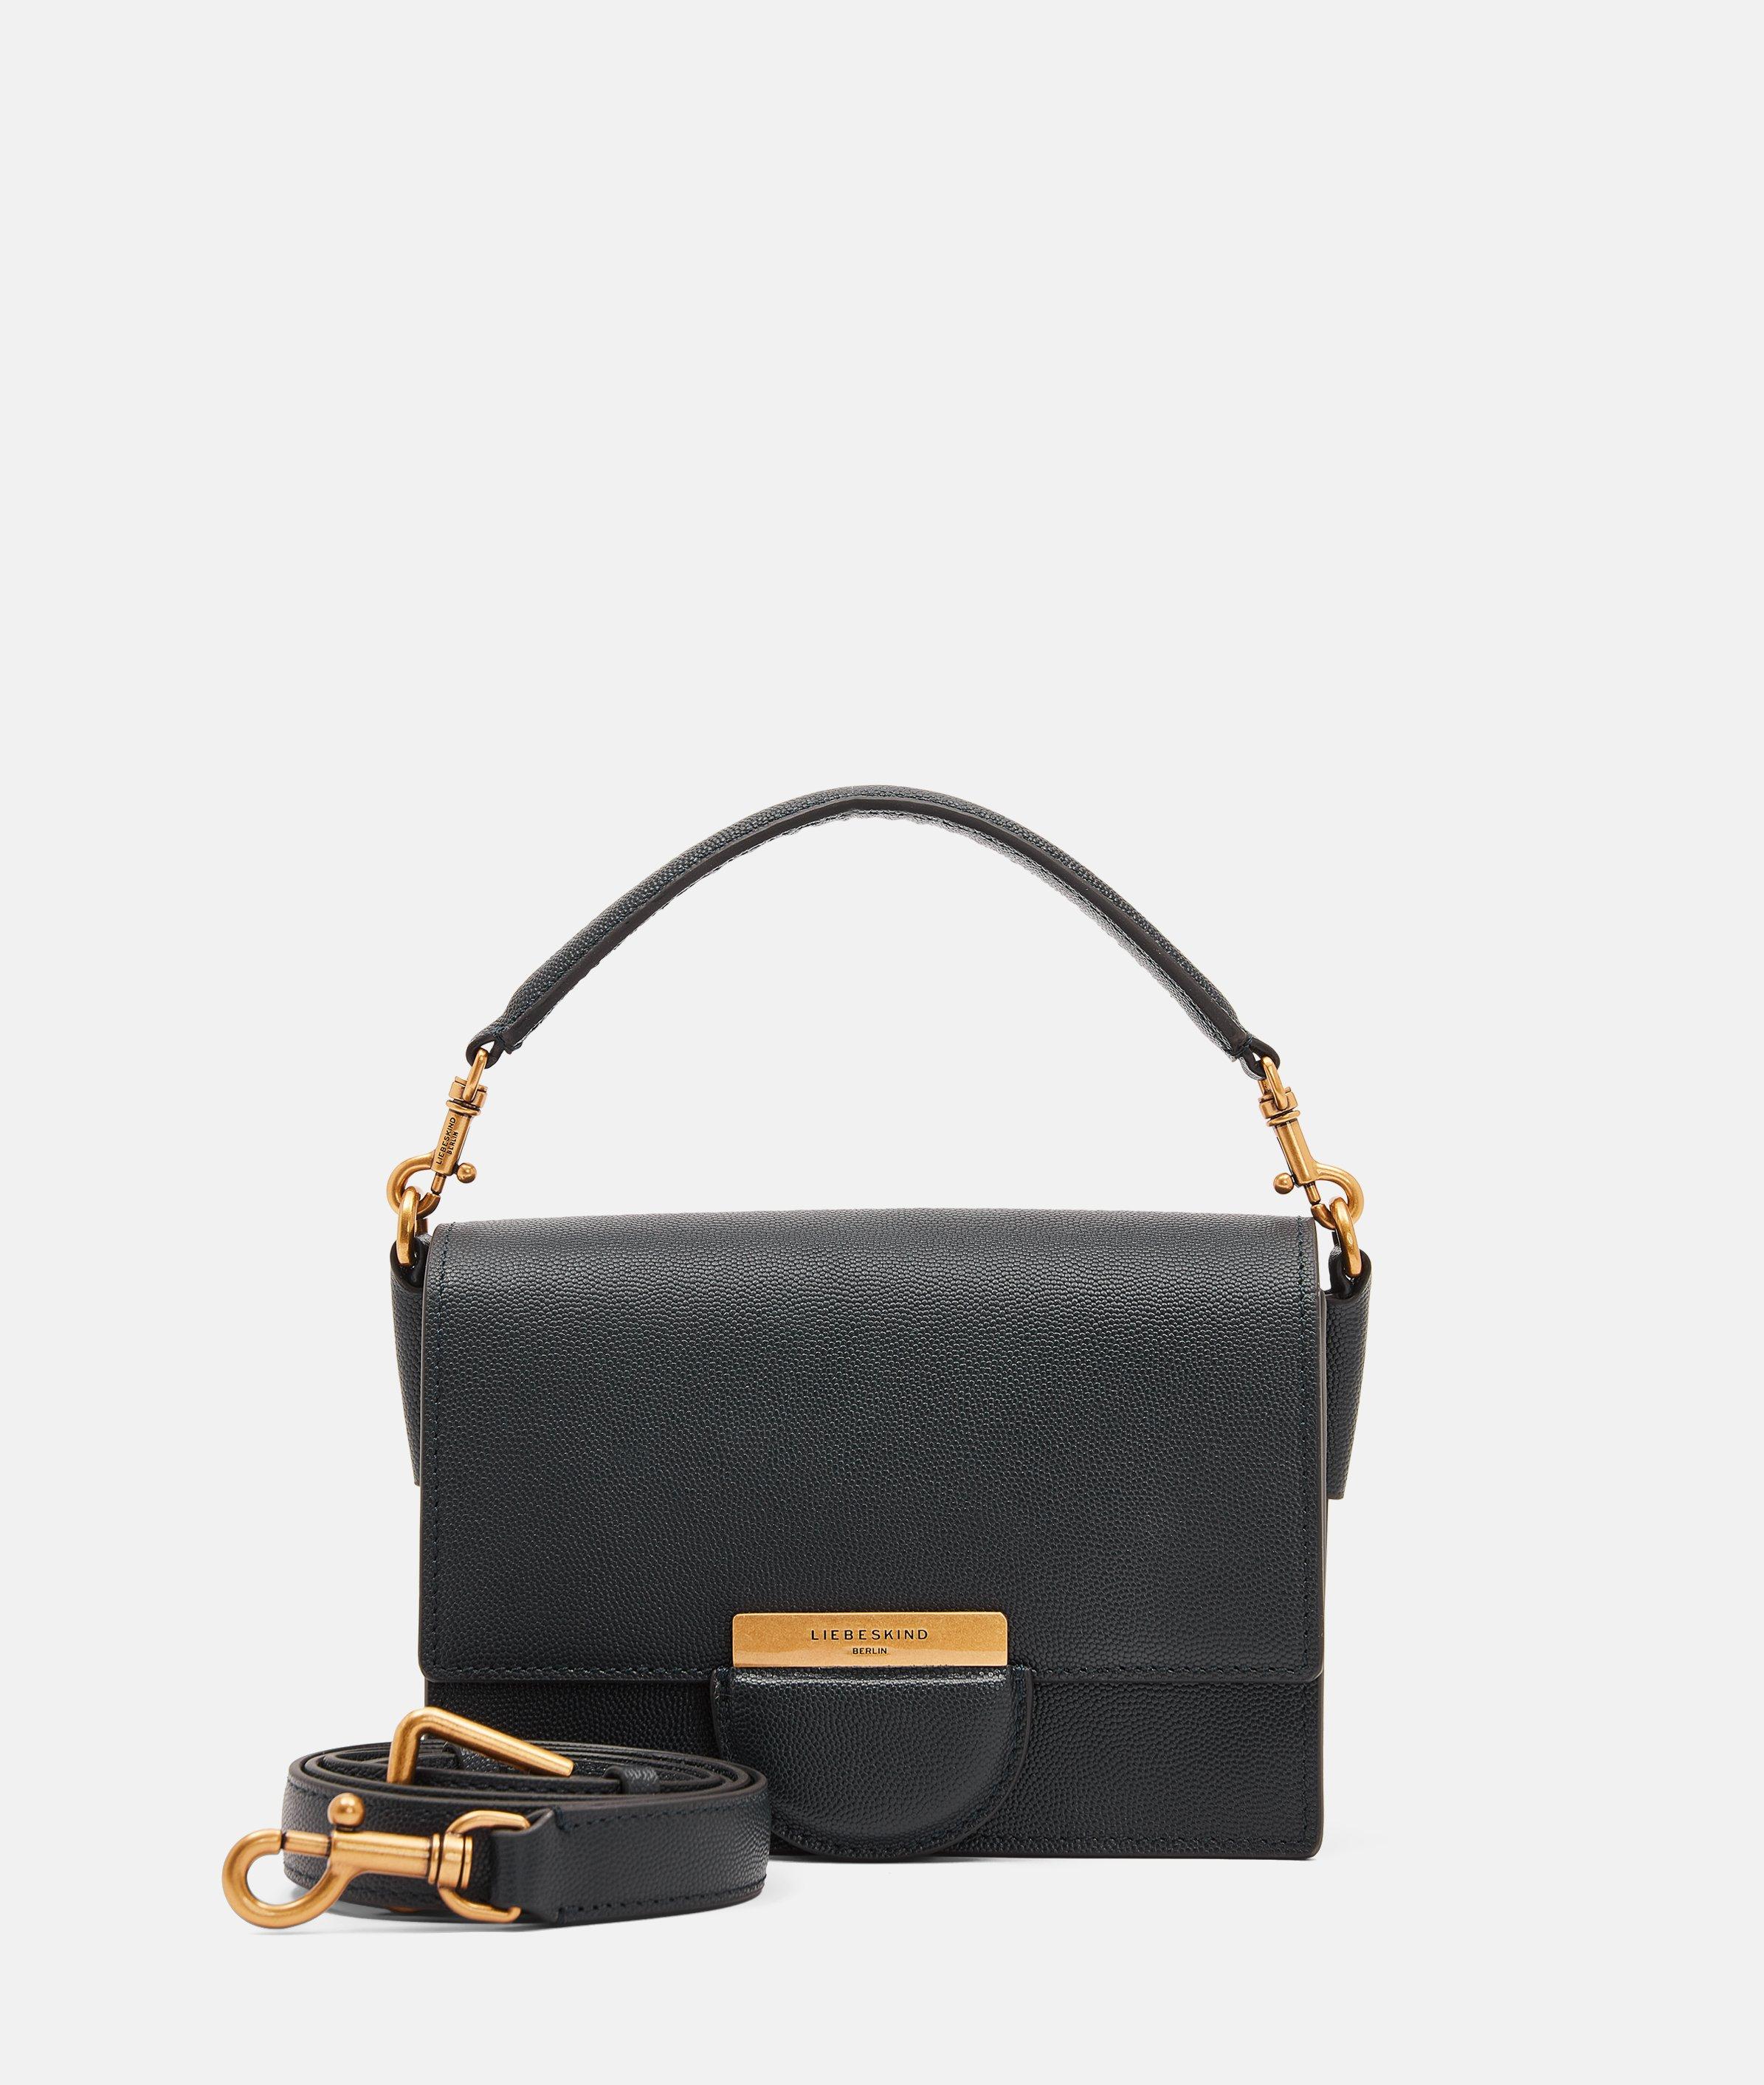 Handbags on sale| LIEBESKIND Berlin